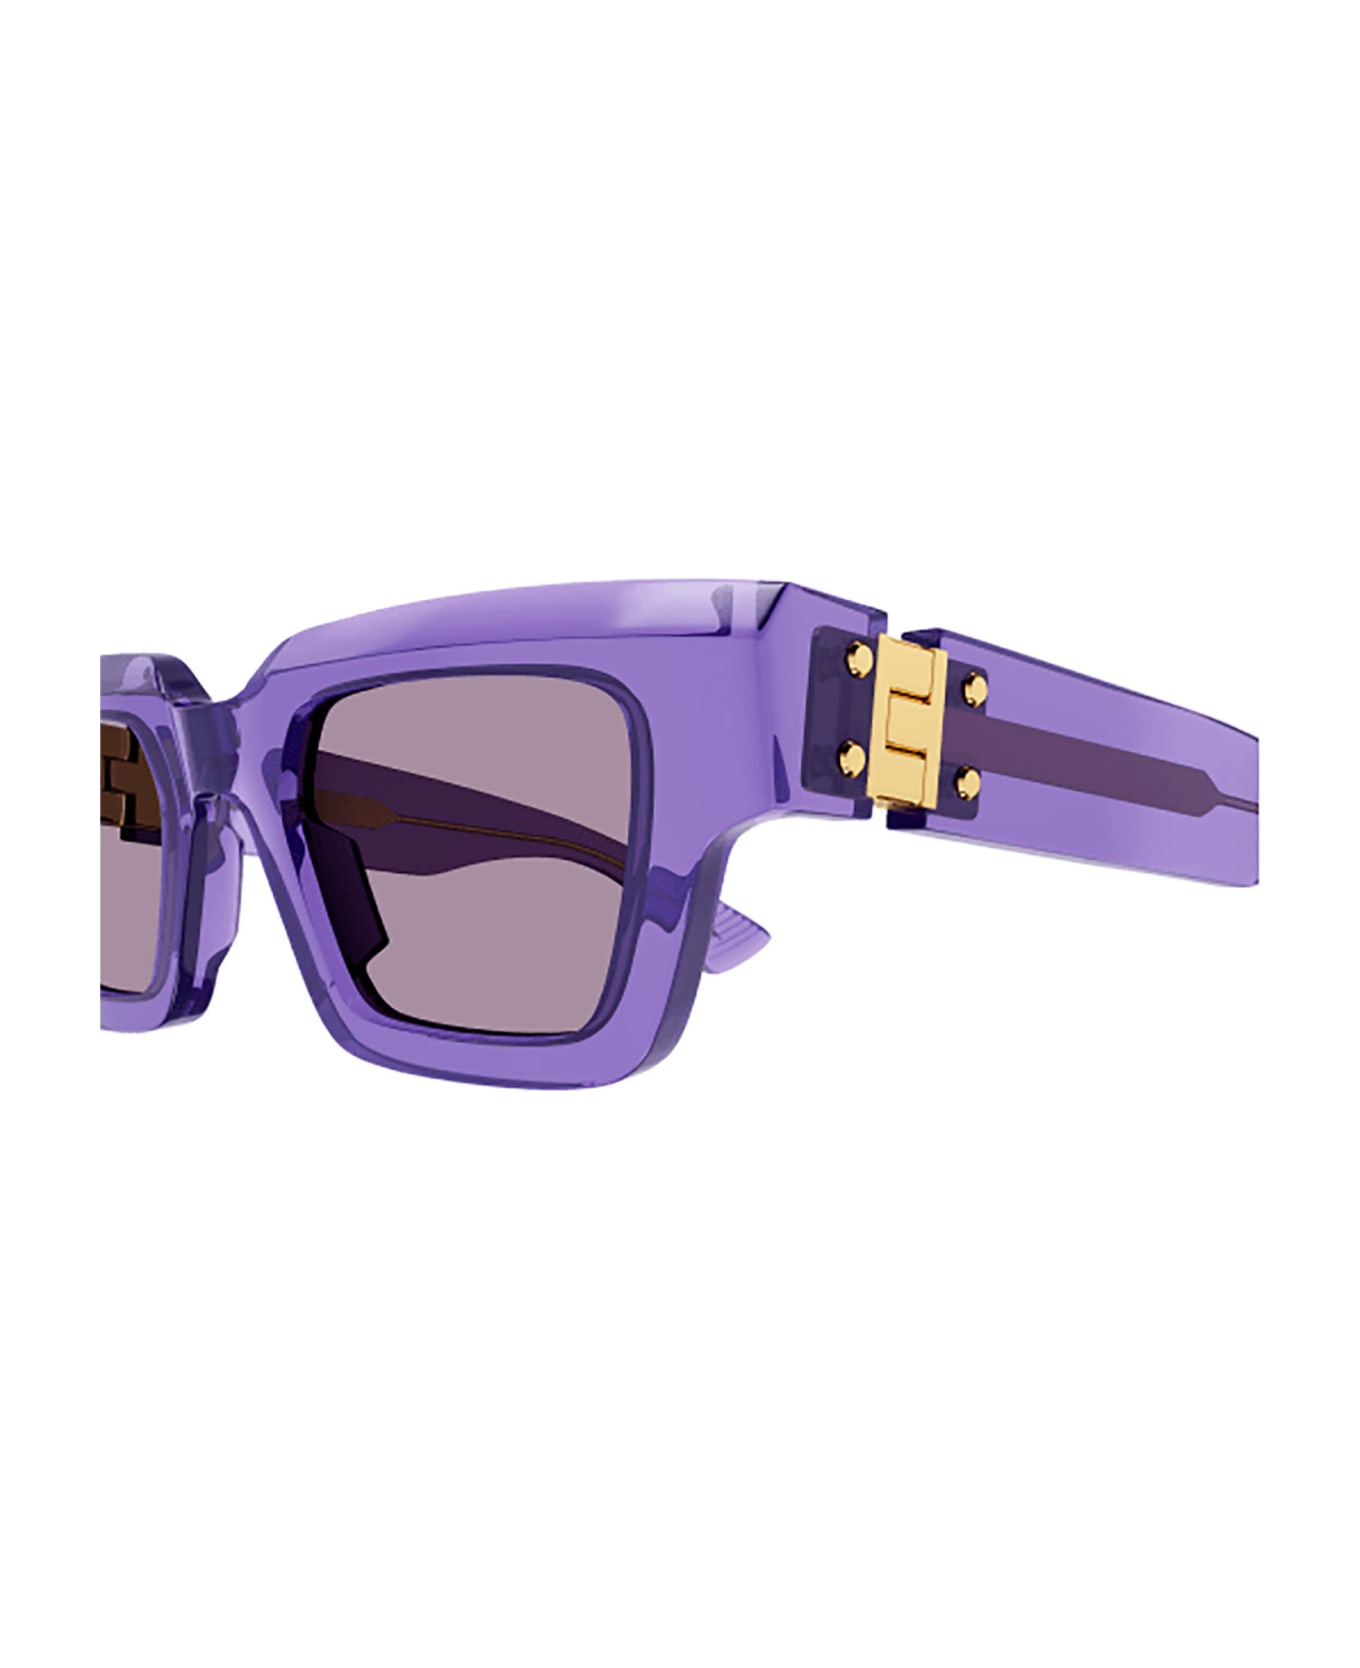 Bottega Veneta Eyewear 1g7r4ni0a - 003 violet violet violet